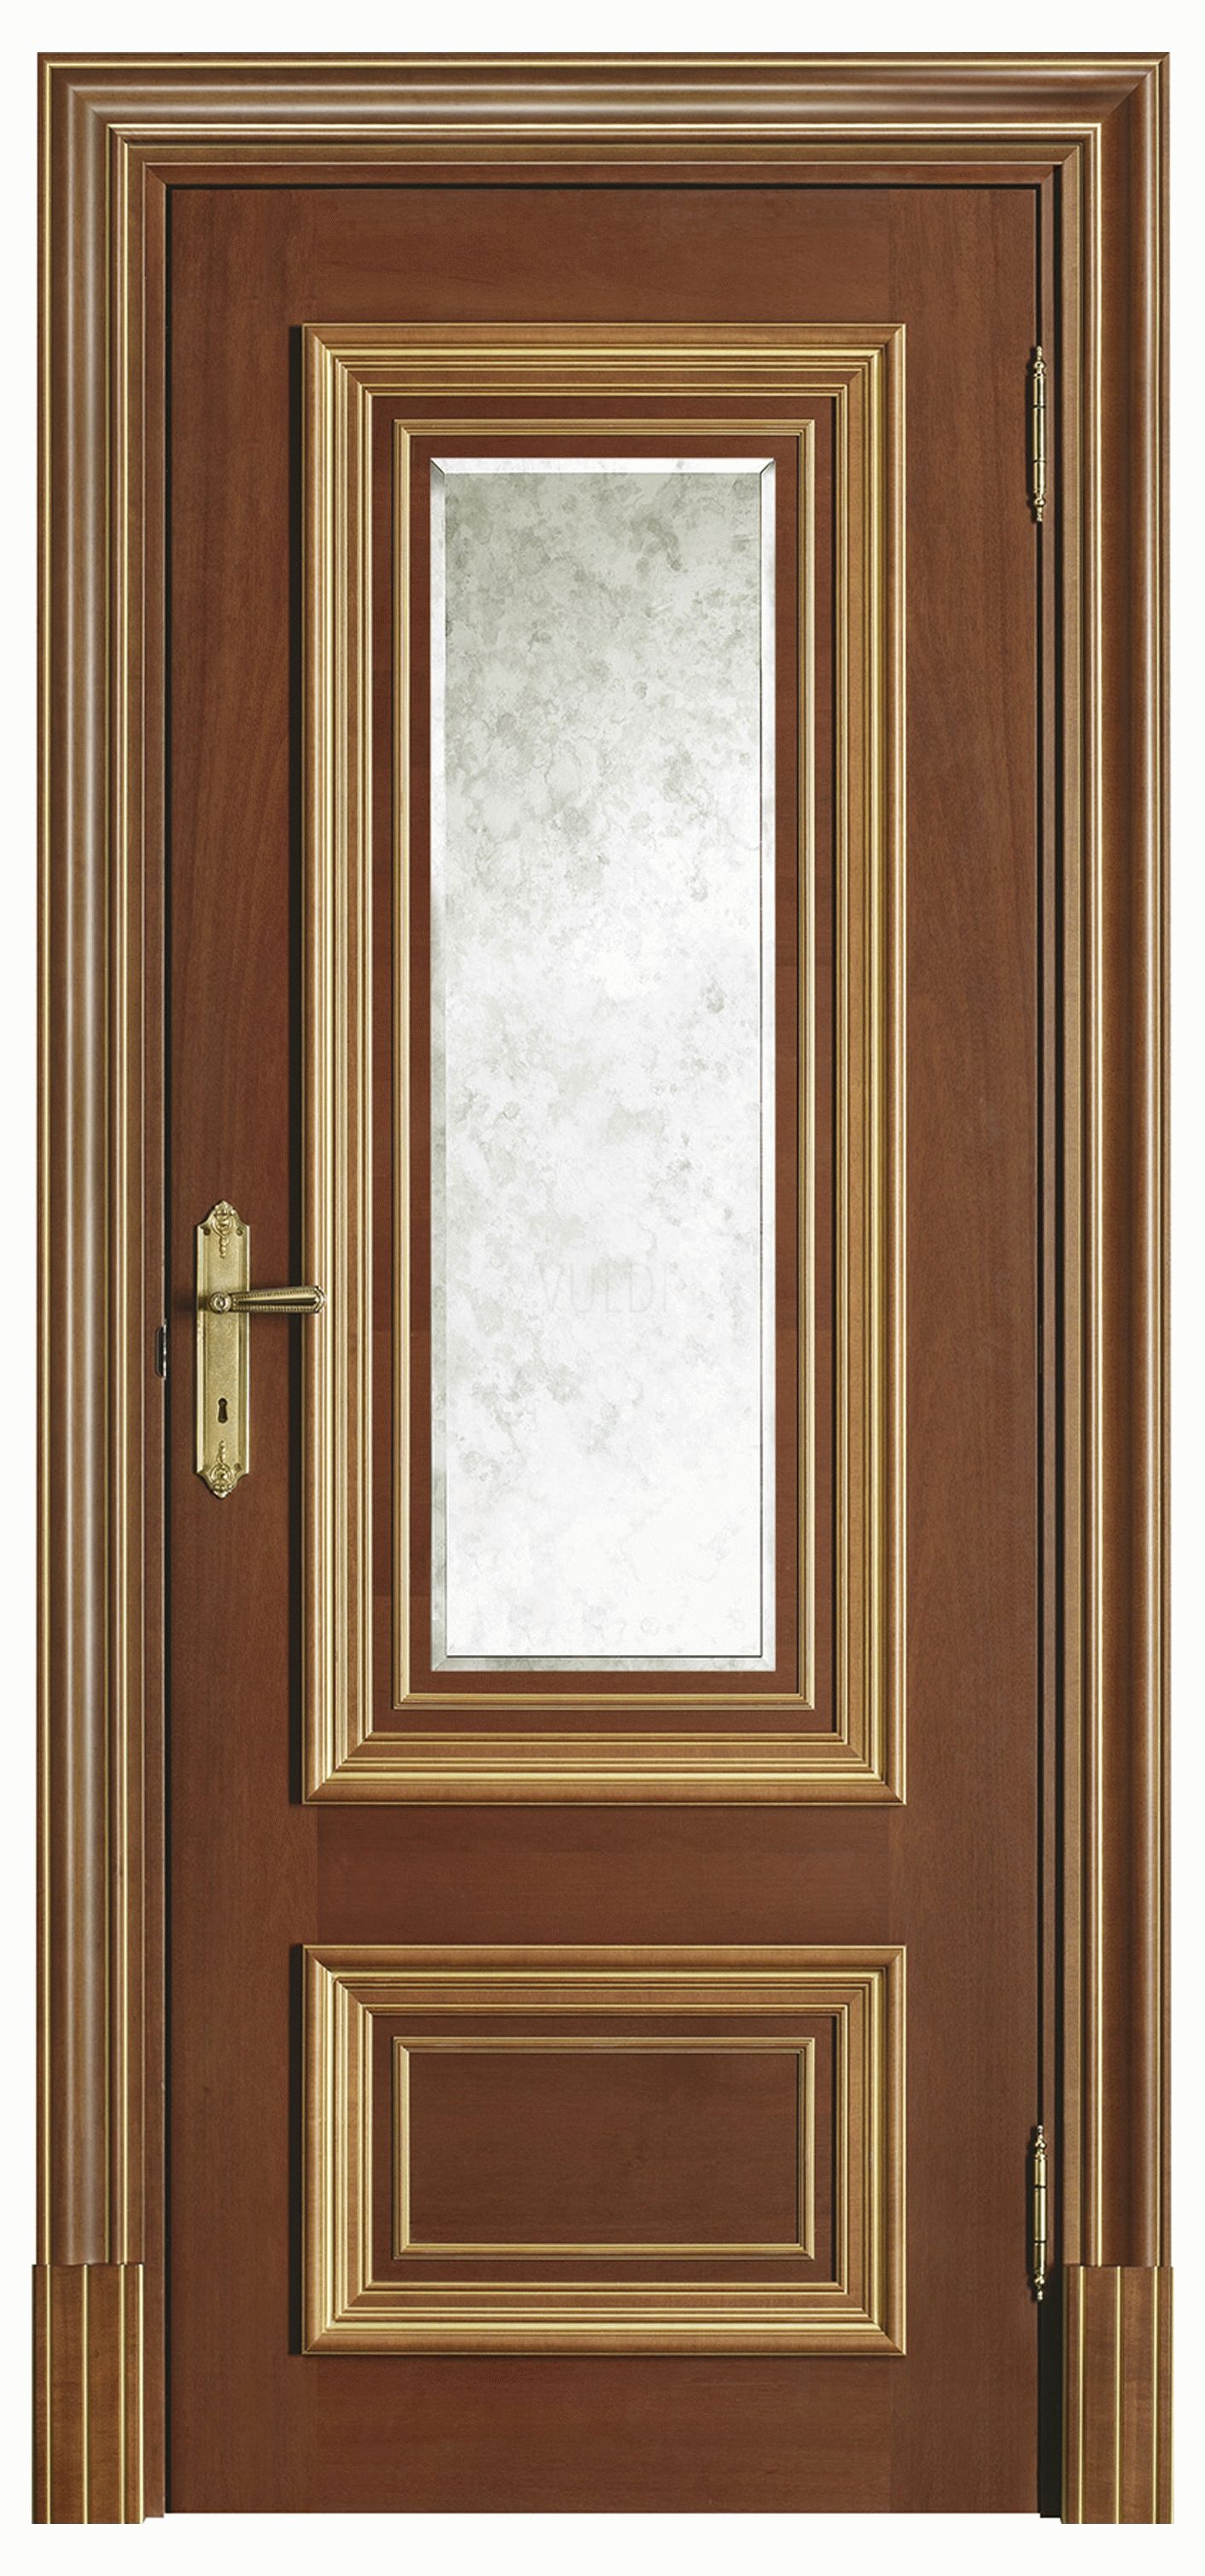  Potenza classico 150 PW Interior Door image from VULDI COMPANY